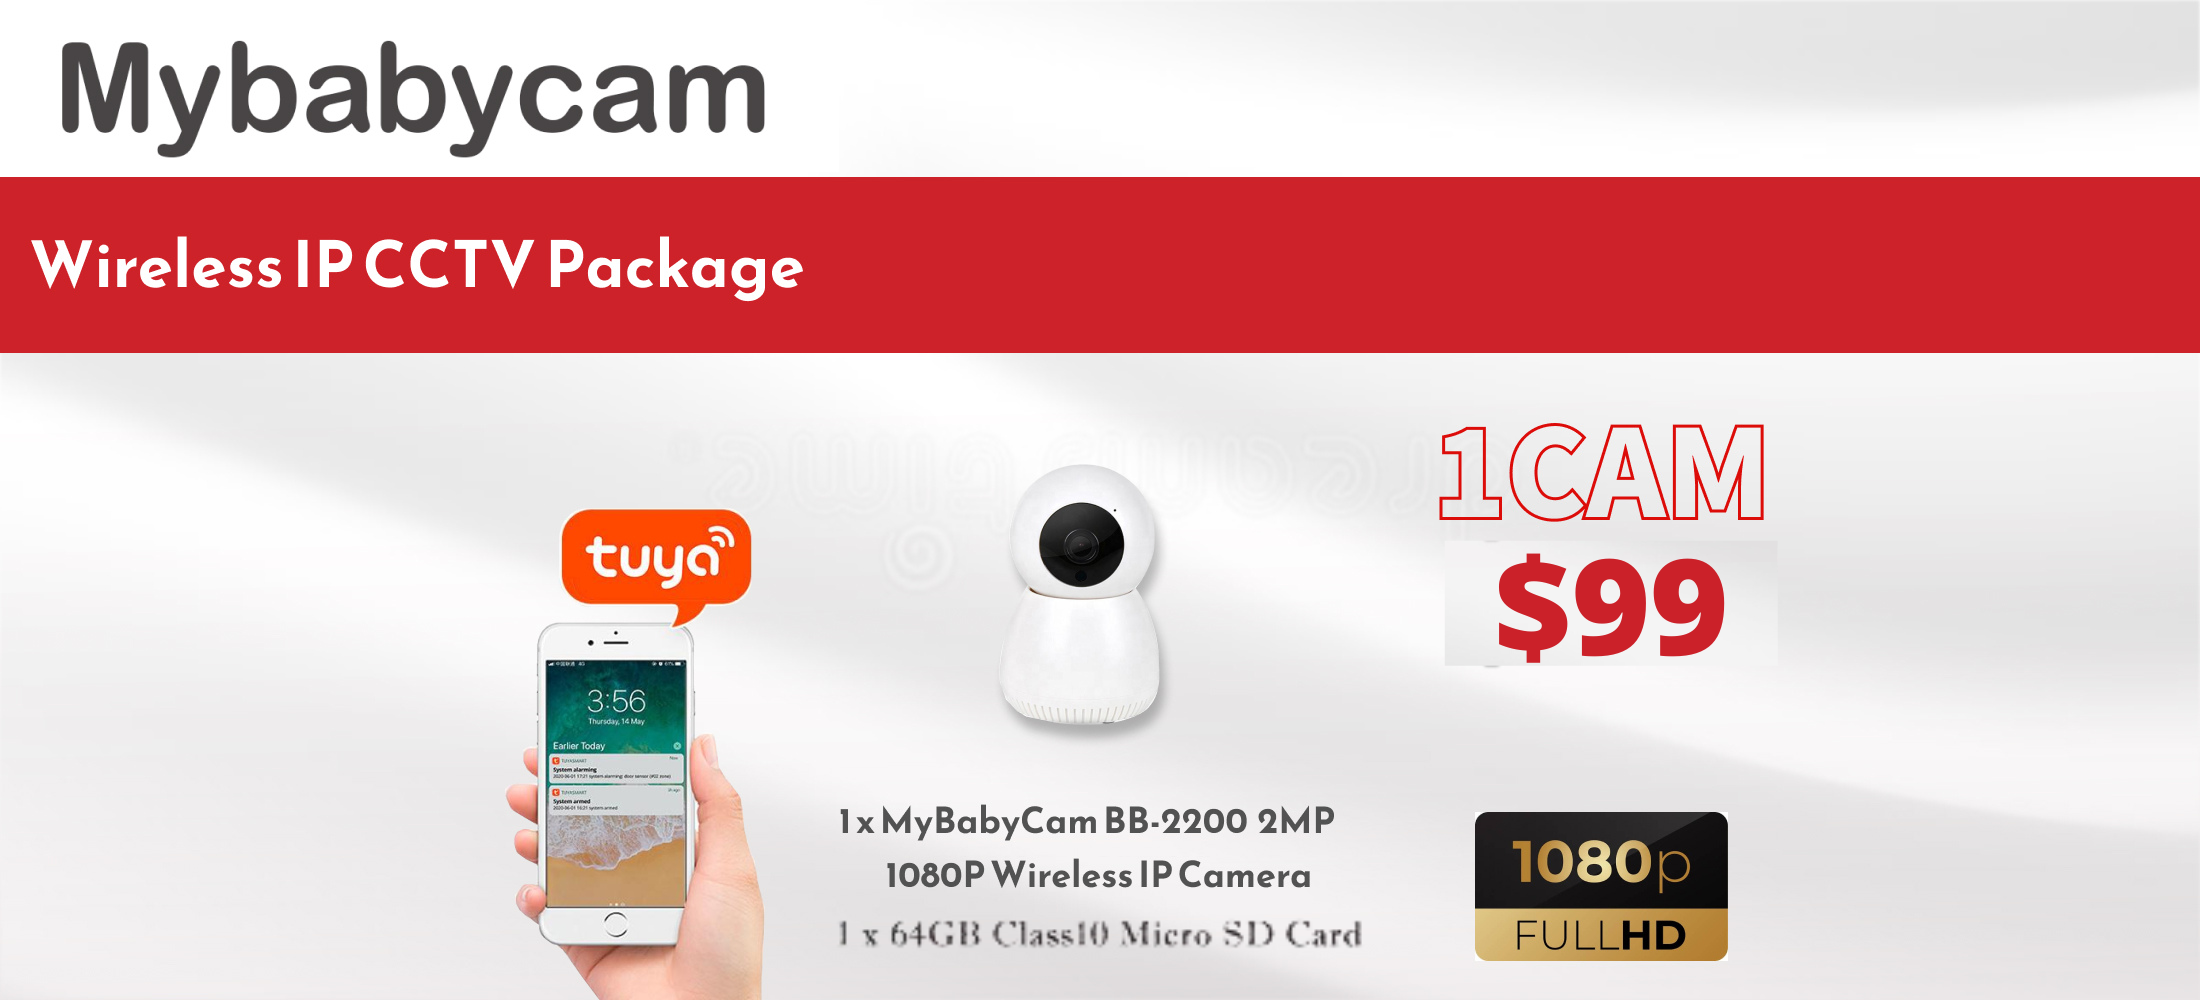 1 CAM Mybabycam Wireless IP CCTV Package  $99.00